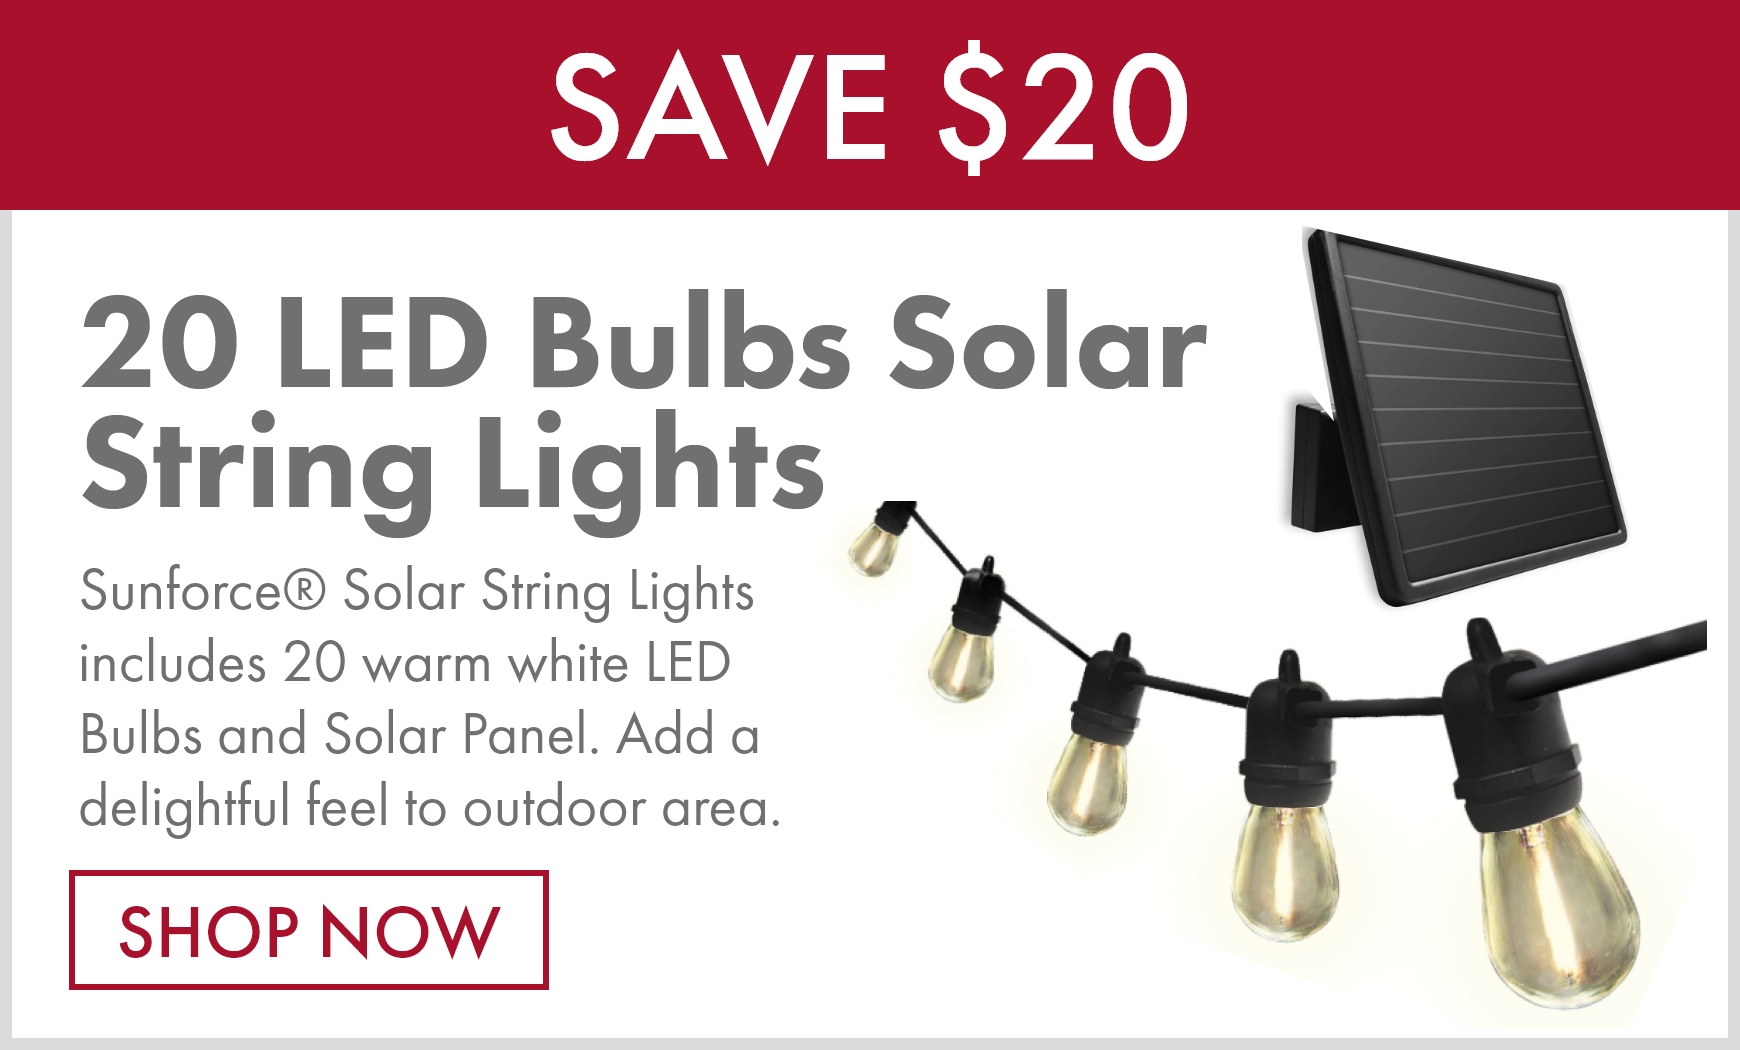 Sunforce® 20 LED Bulbs Solar String Lights